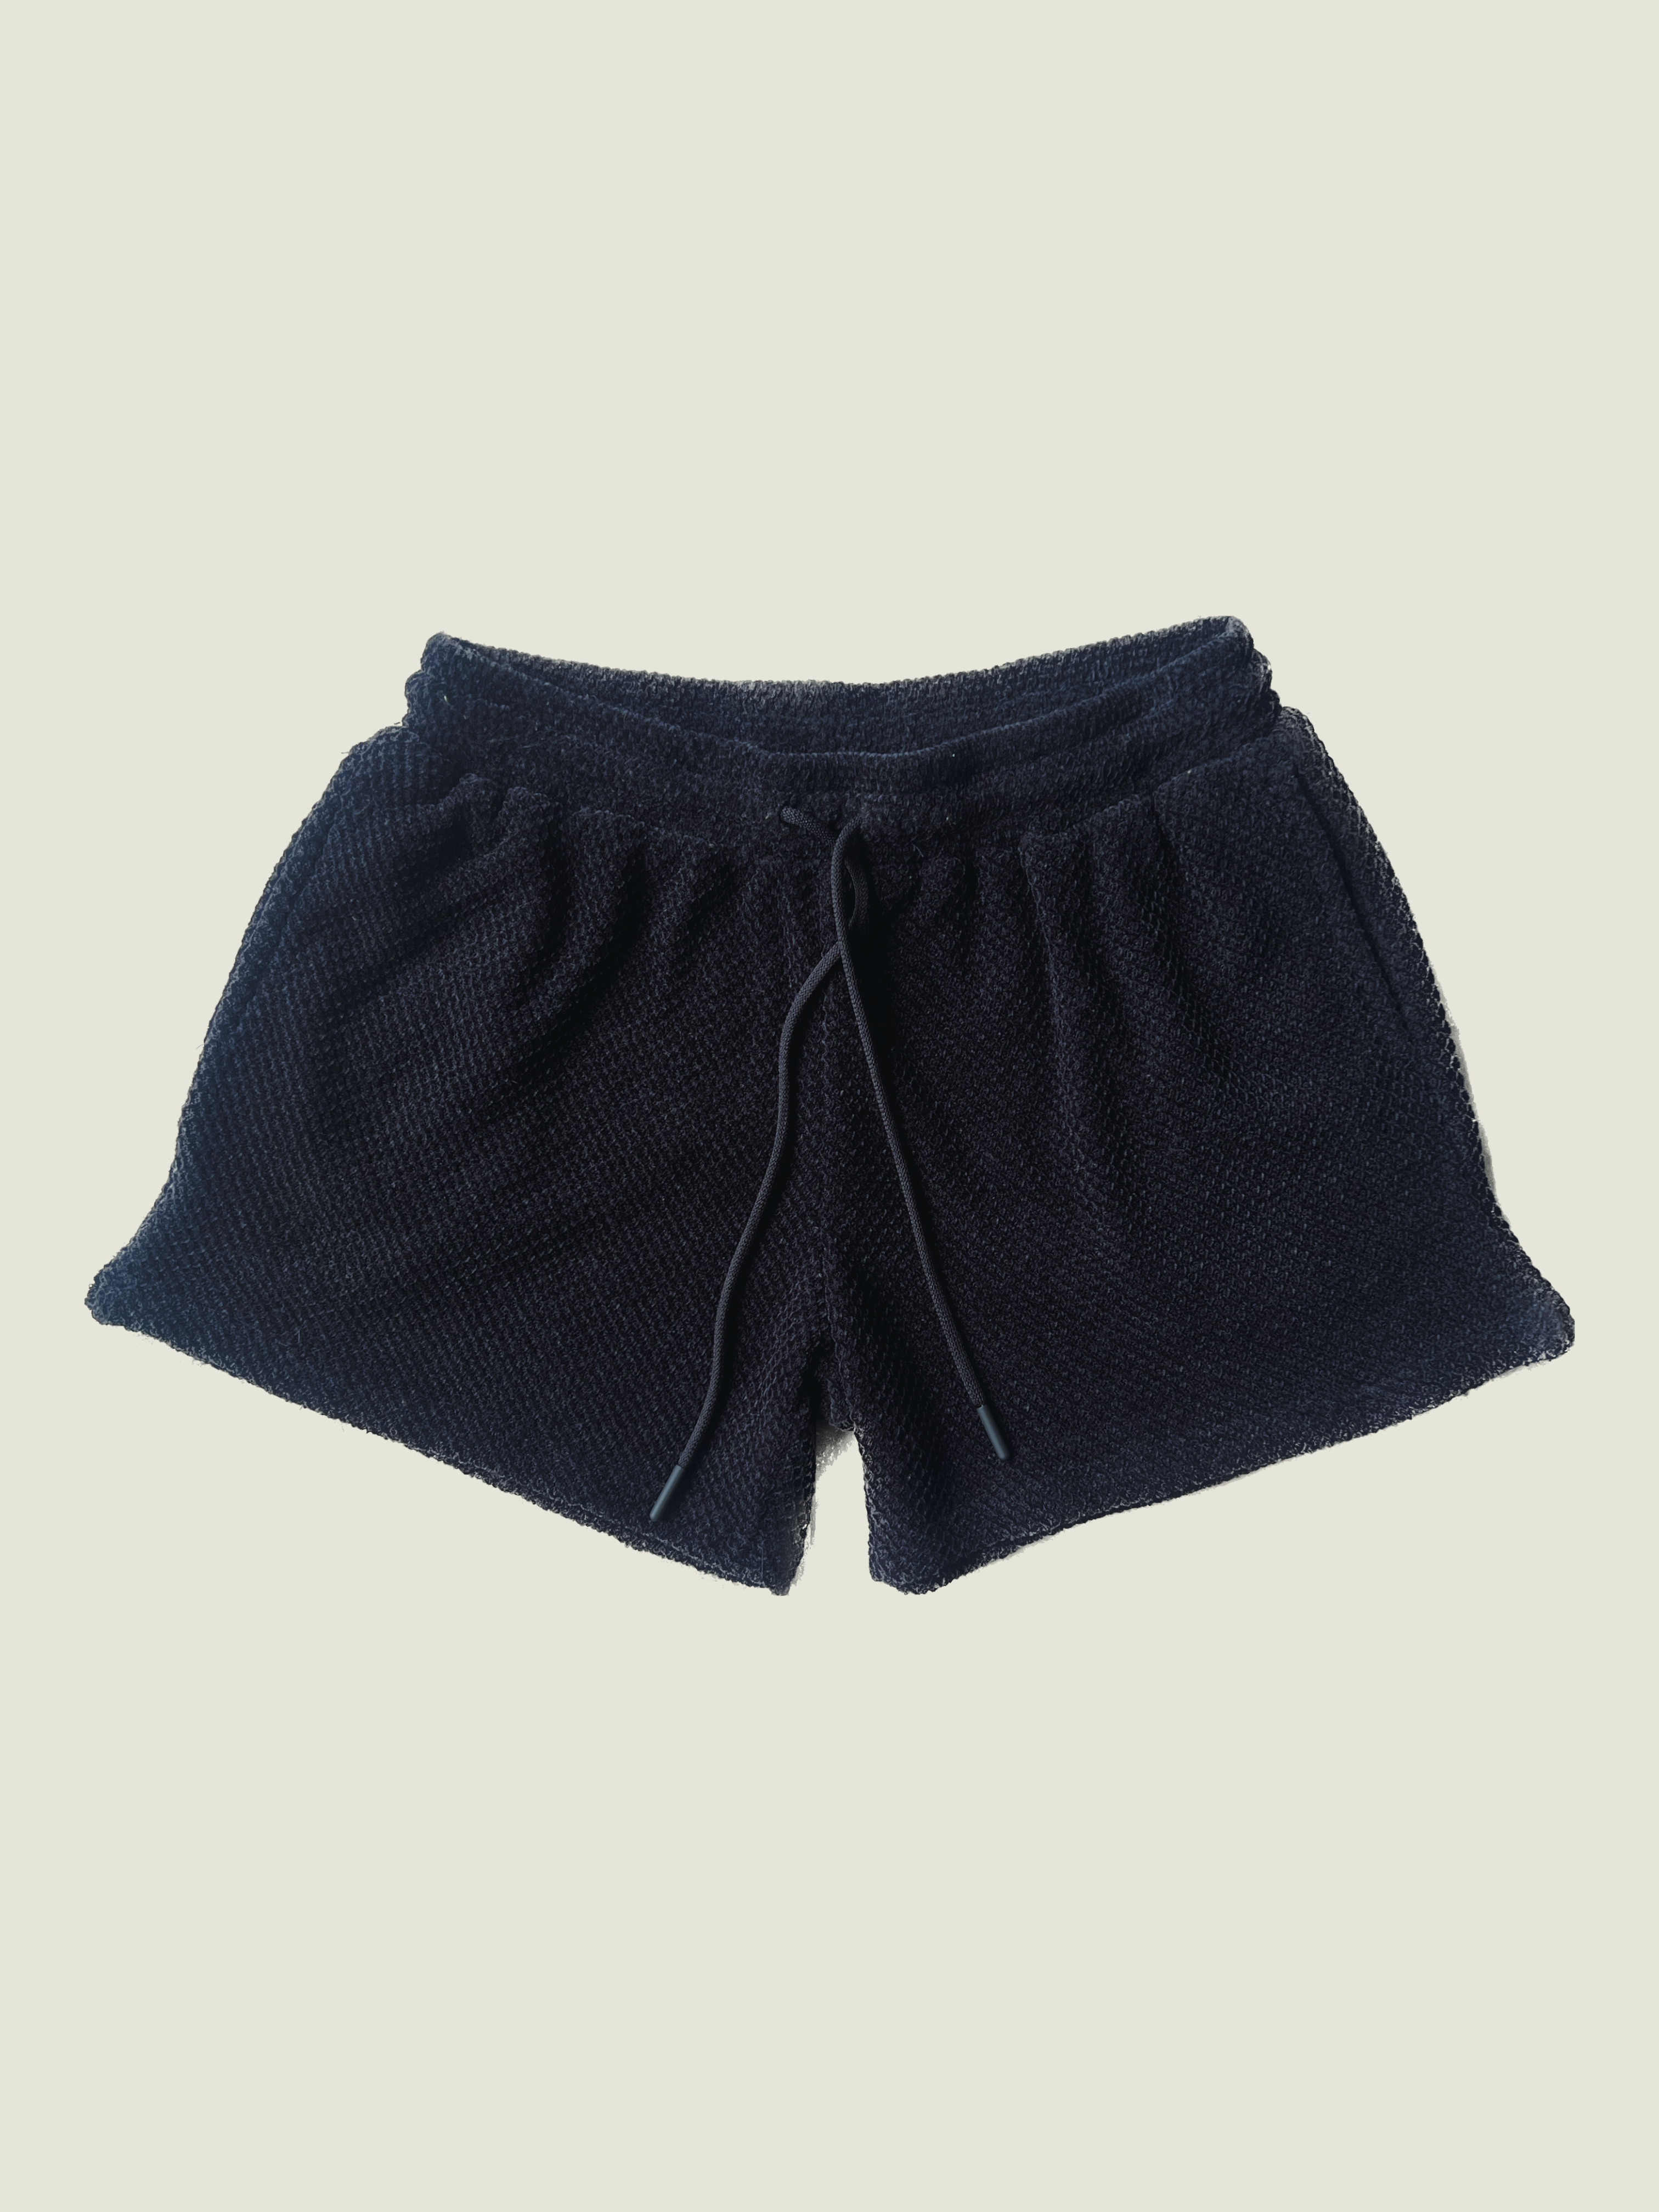 Loom Shorts - Black